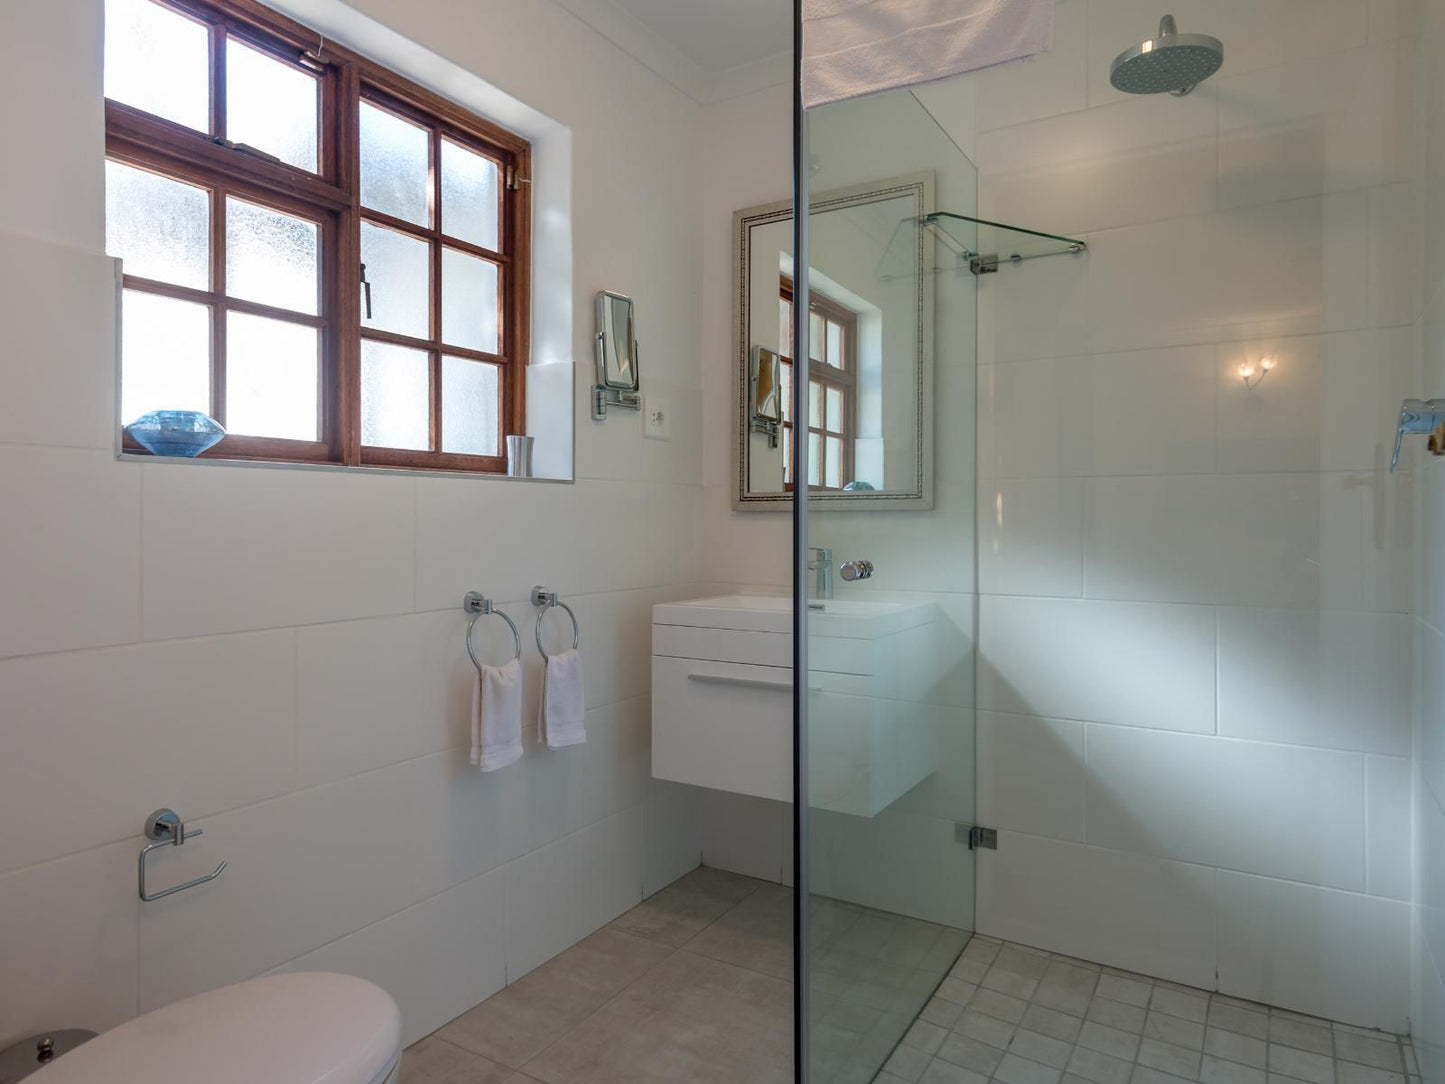 Just Unwind Radloff Park Somerset West Western Cape South Africa Unsaturated, Bathroom